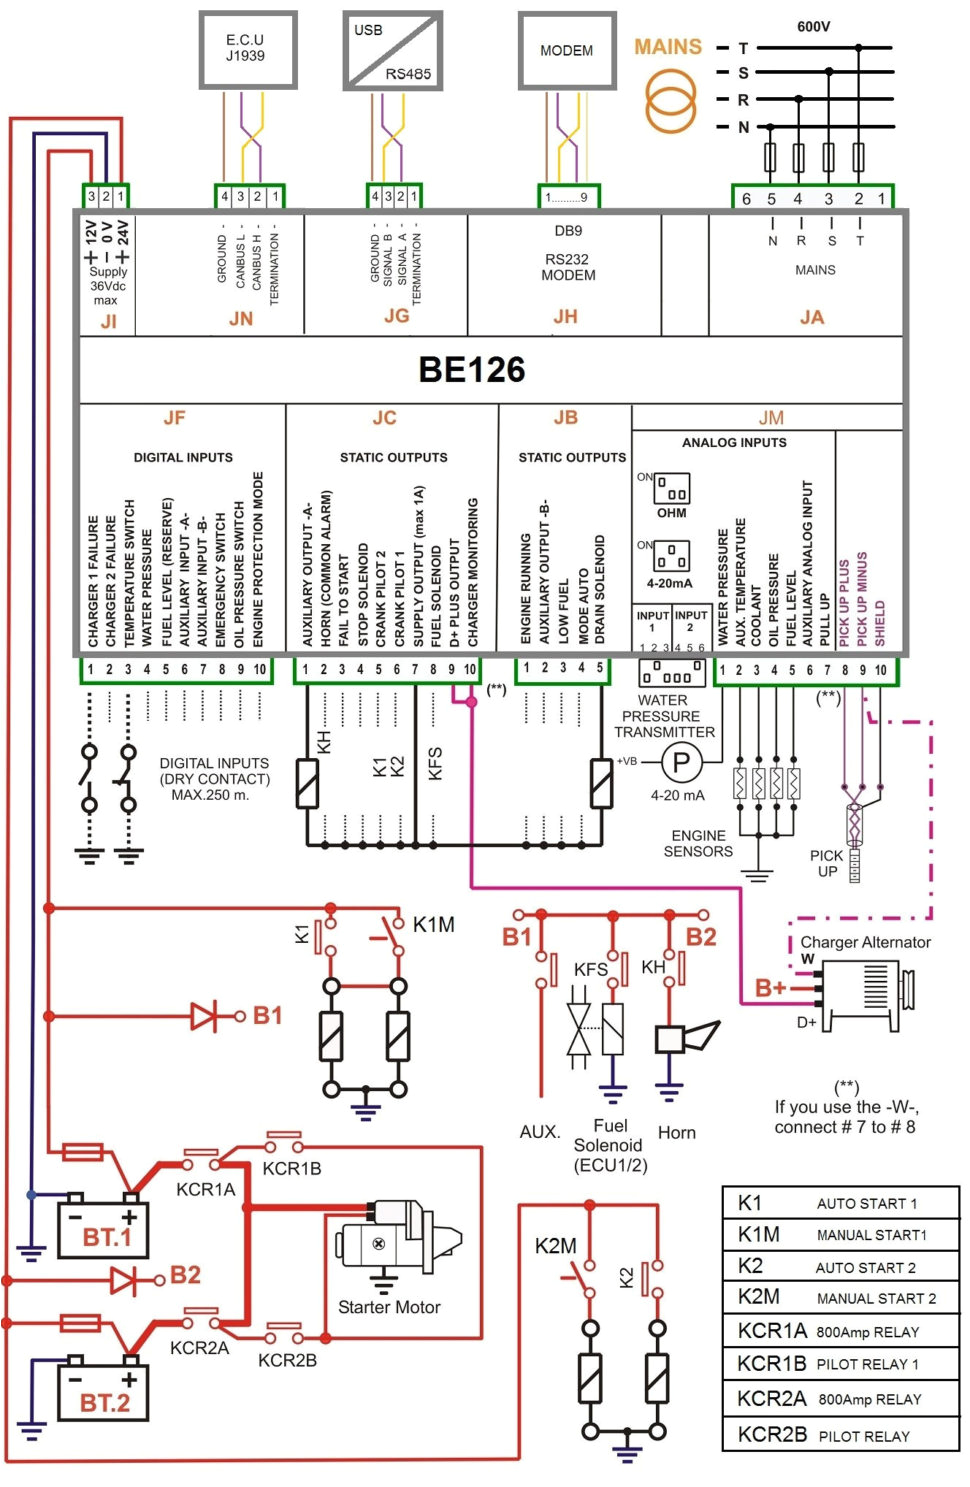 paradox mg5050 wiring diagram luxury paradox alarm wiring diagram page 2 wiring diagram and schematics jpg